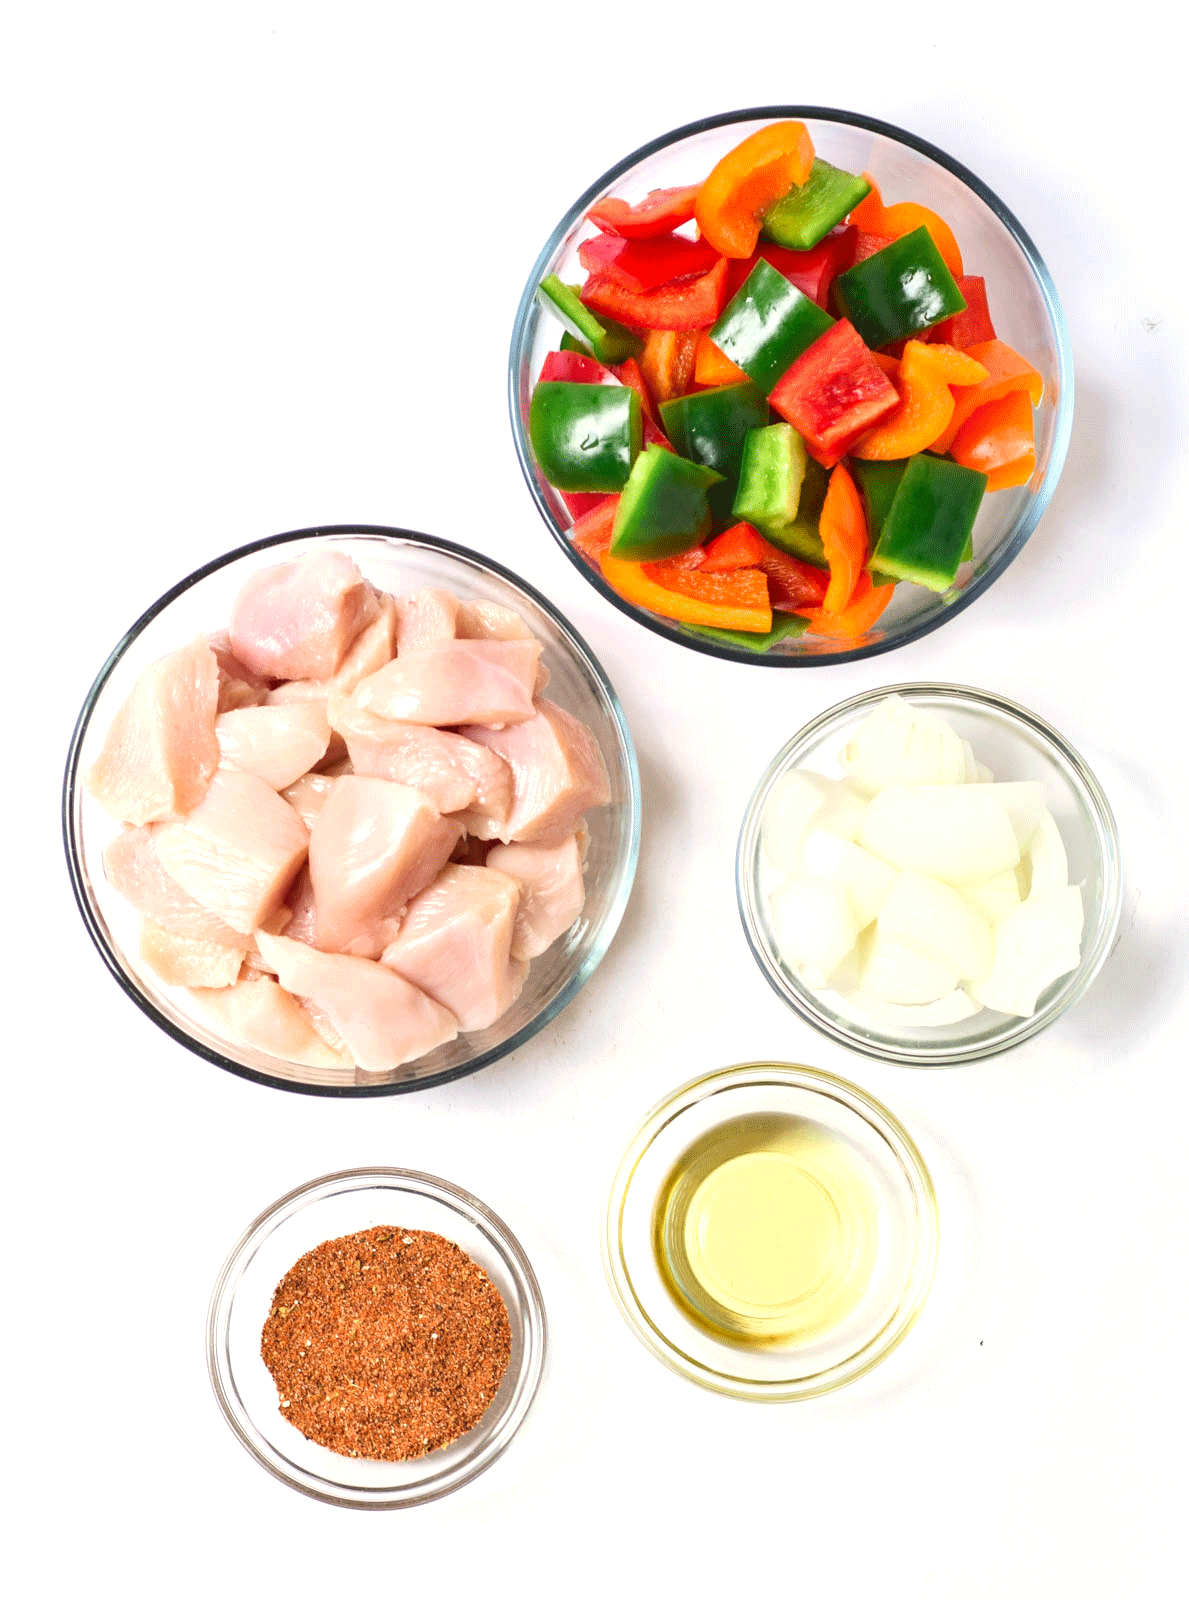 bowls of chicken fajita ingredients